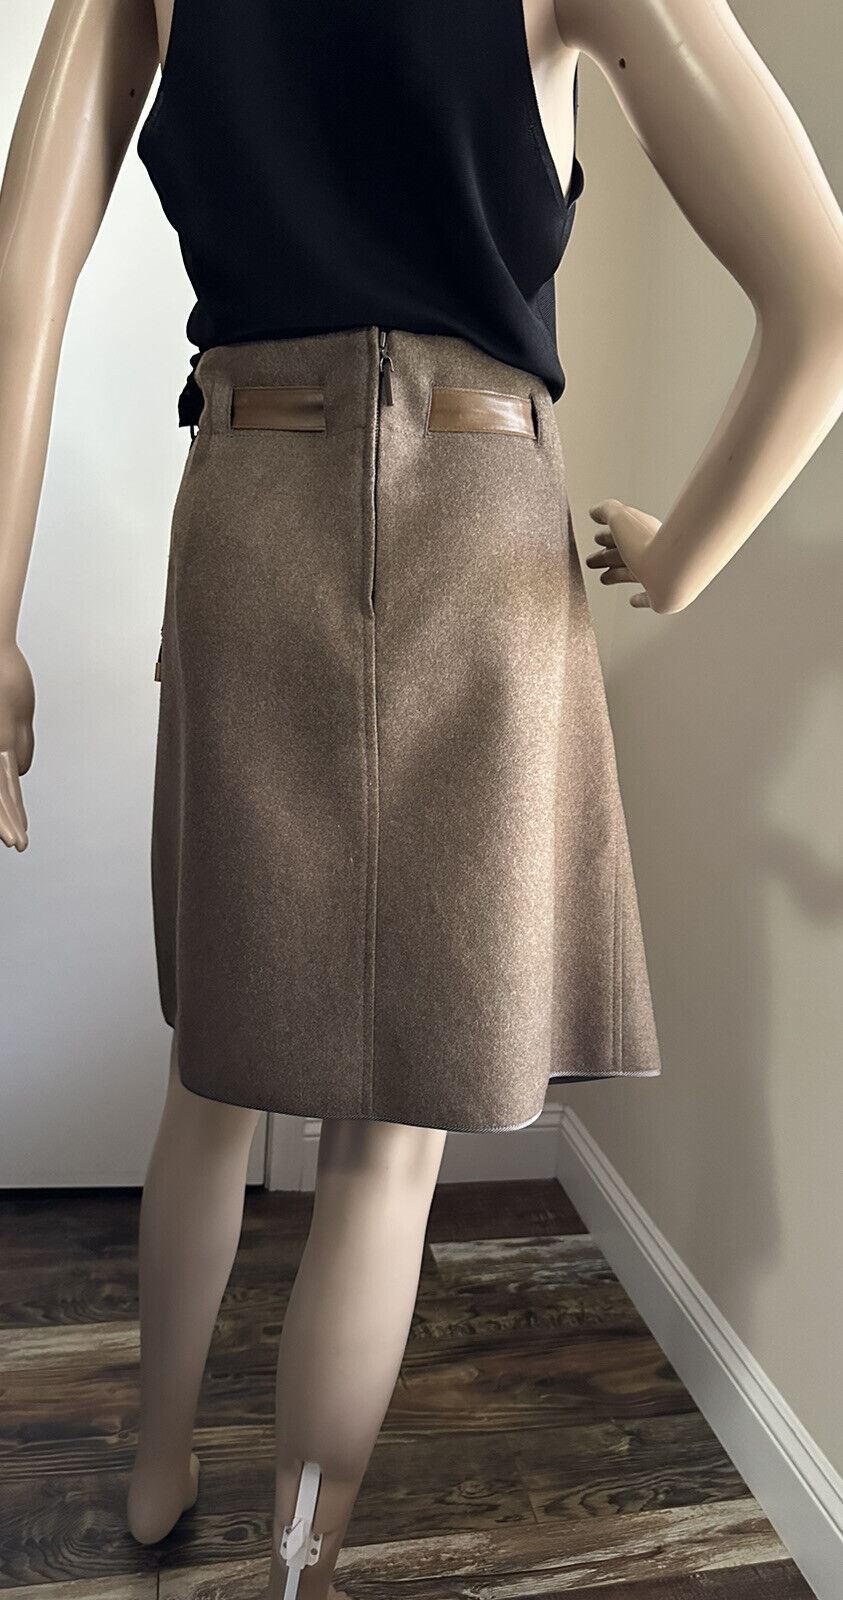 Коричневая юбка с поясом Brunello Cucinelli, $1995, 10 США (46 It), Италия